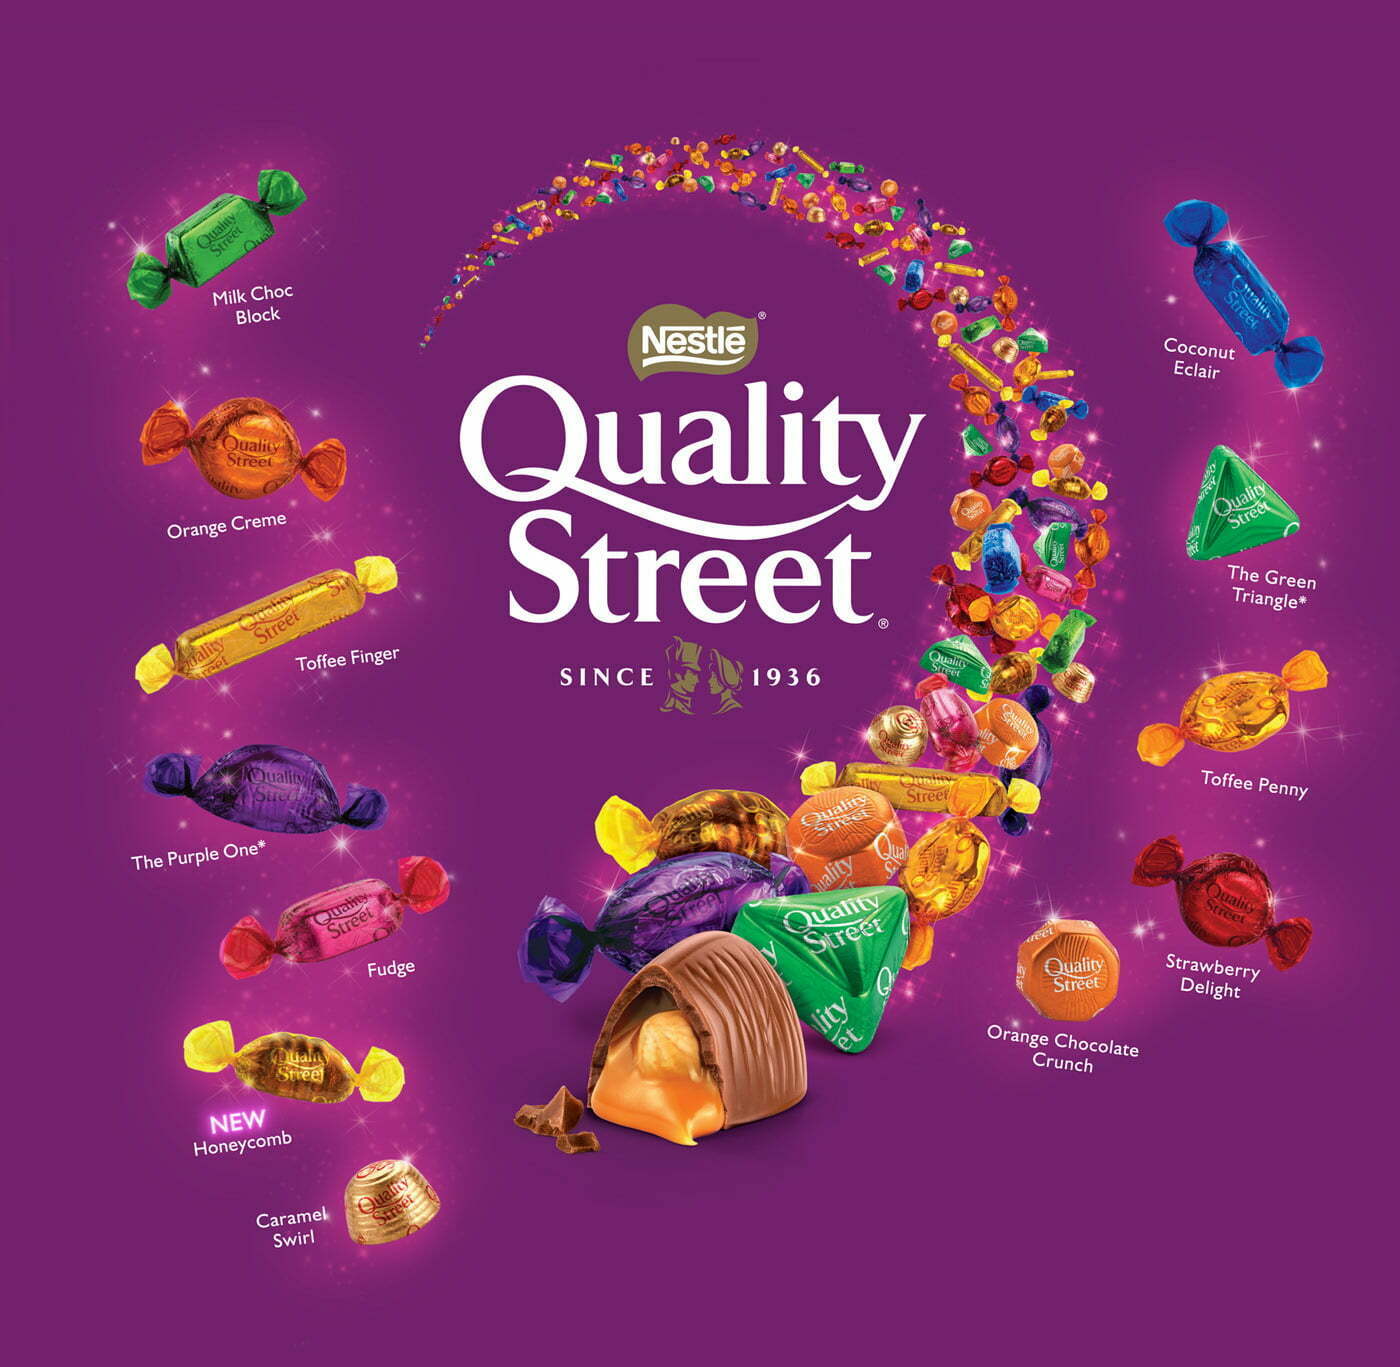 Quality Street  Nestlé Global